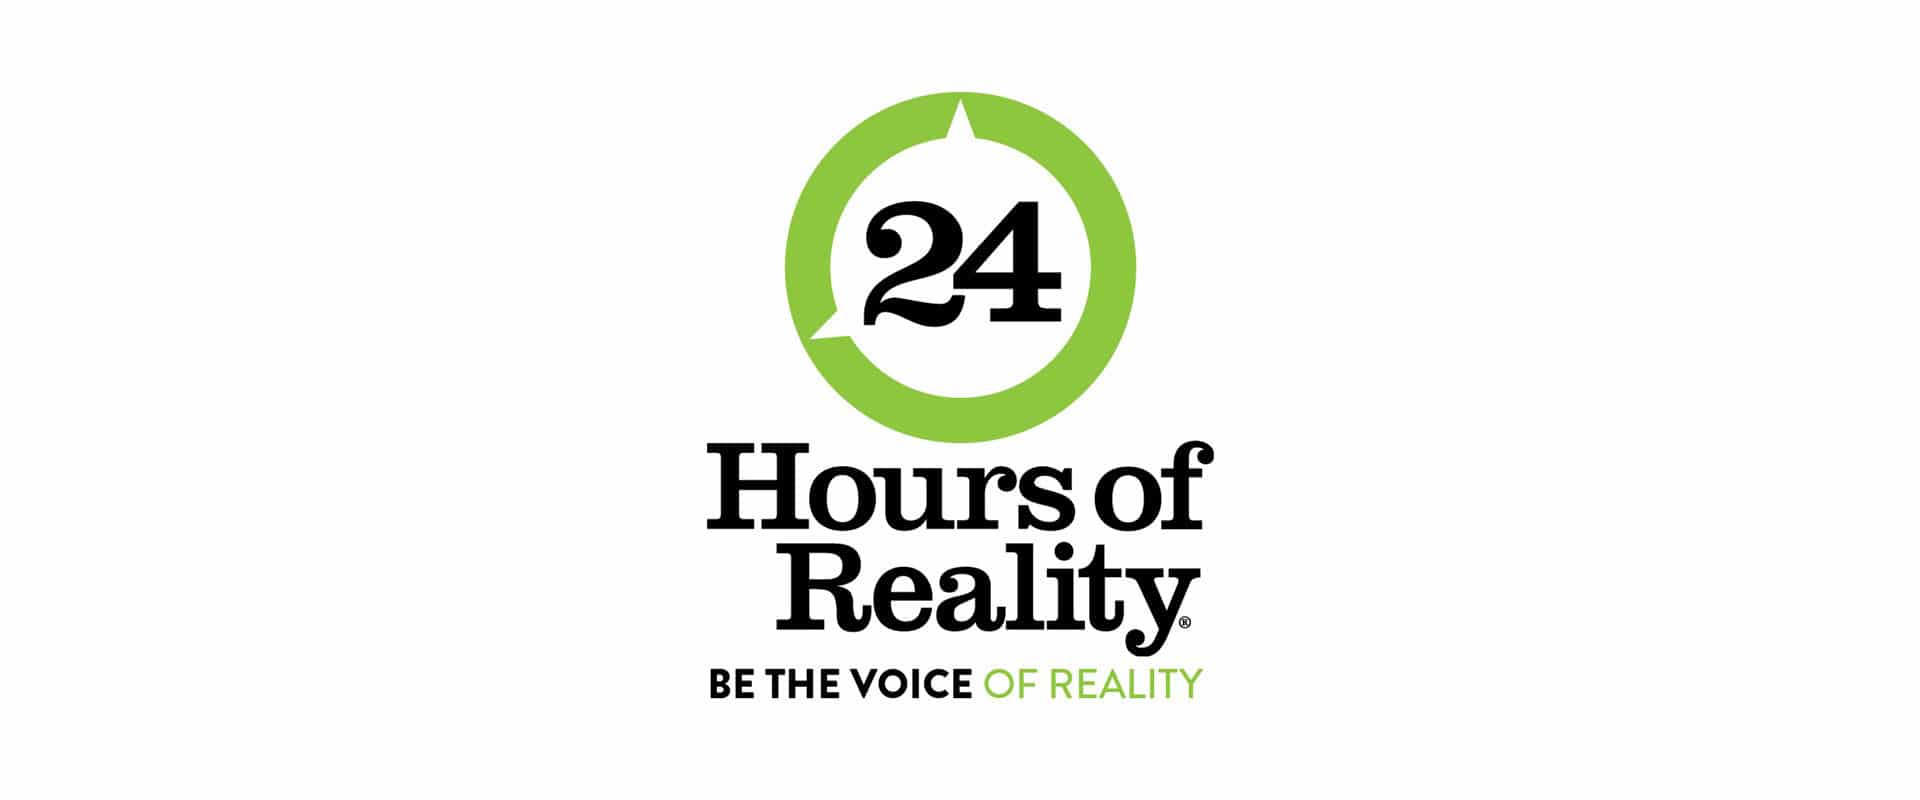 24 hours of reality logo